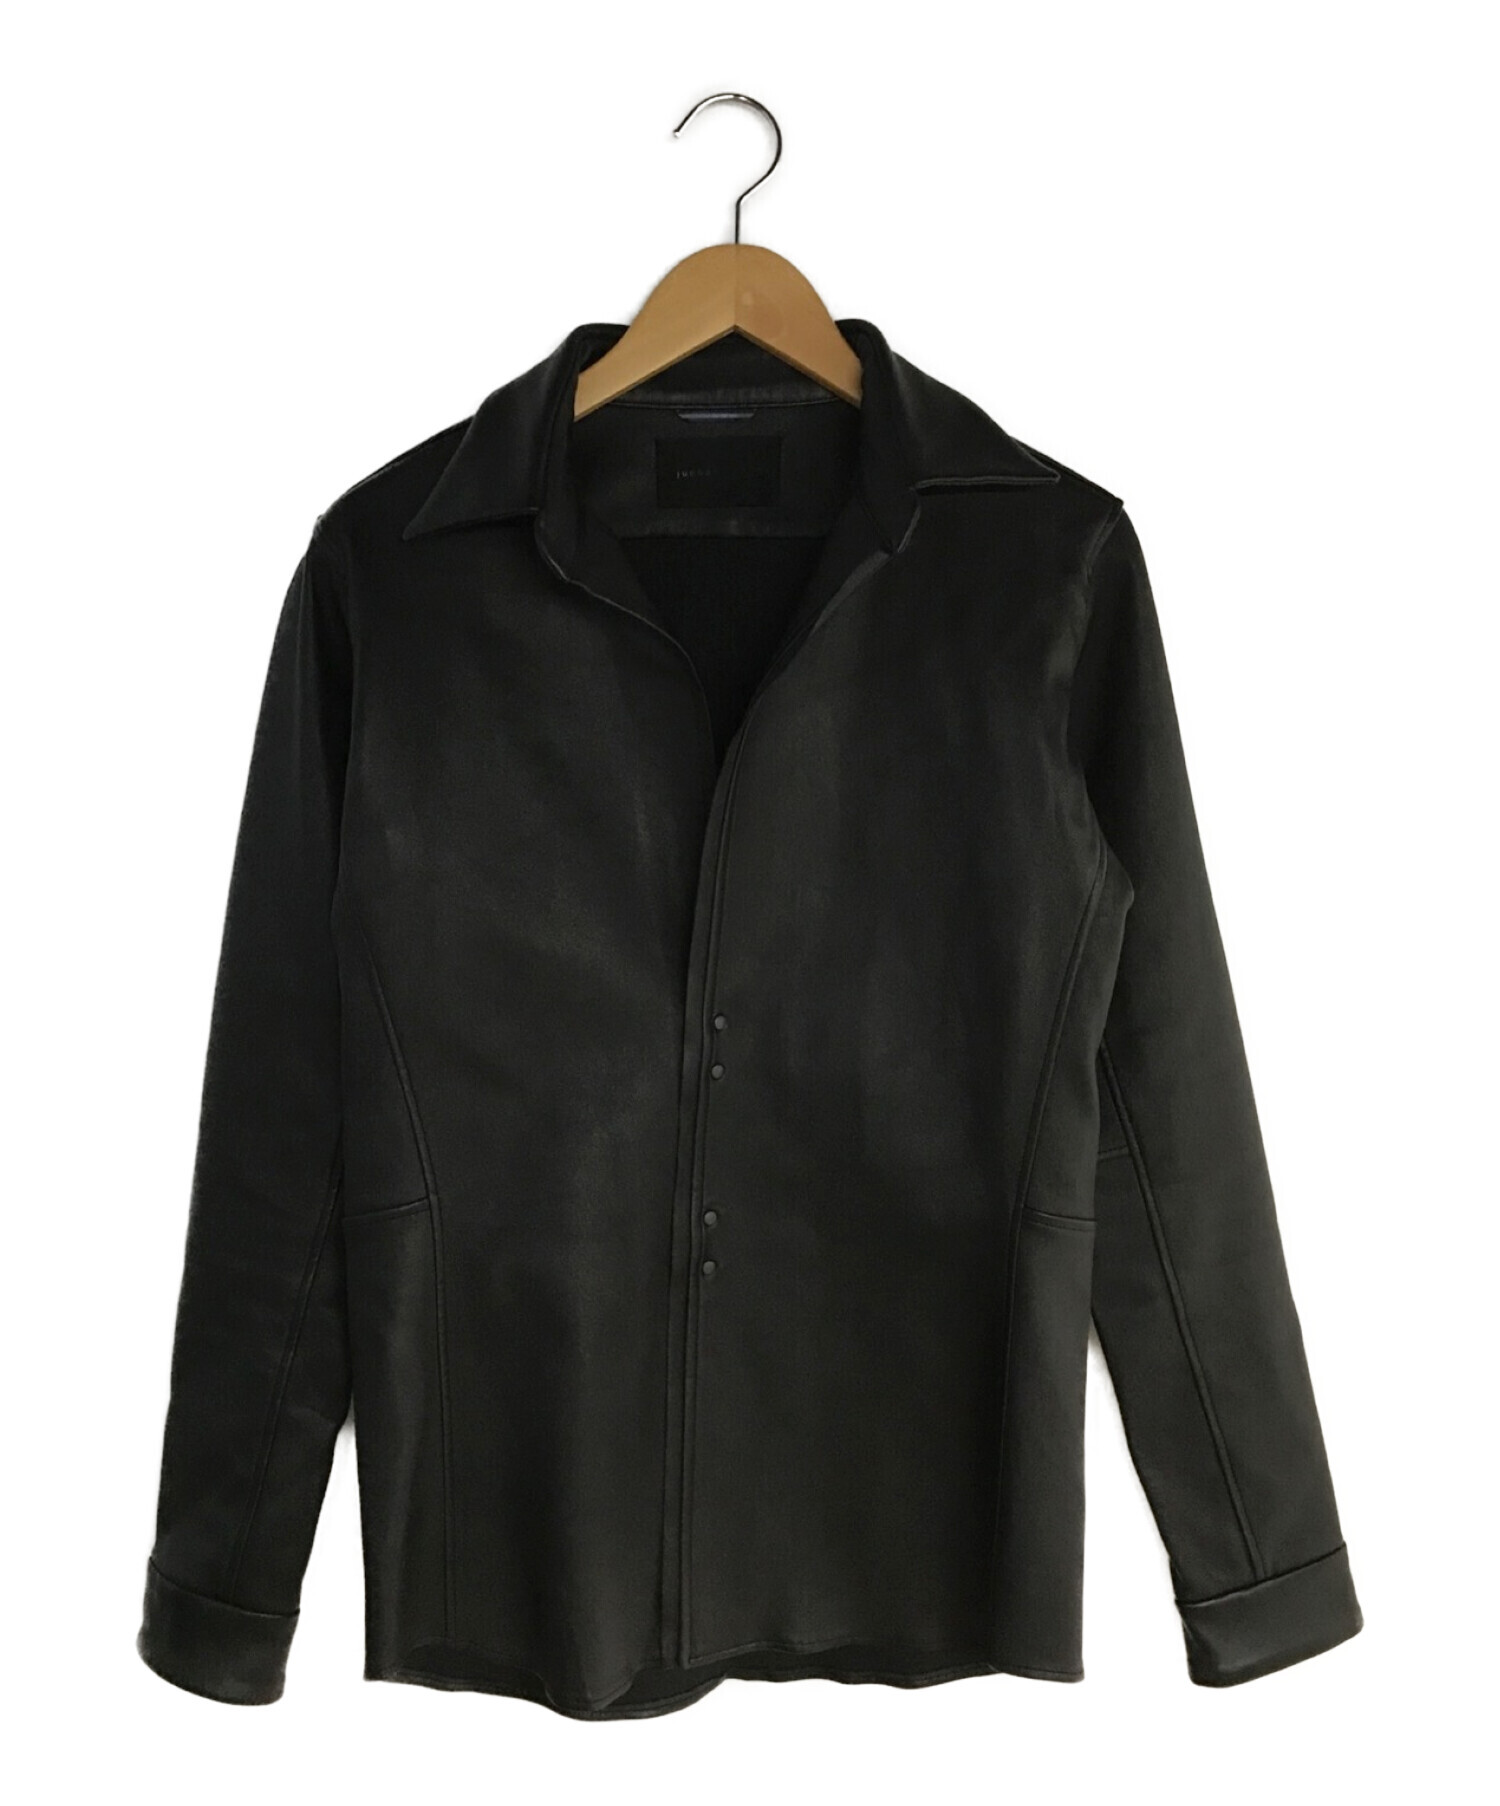 jun hashimoto leather jacket  m丈幅約64cm